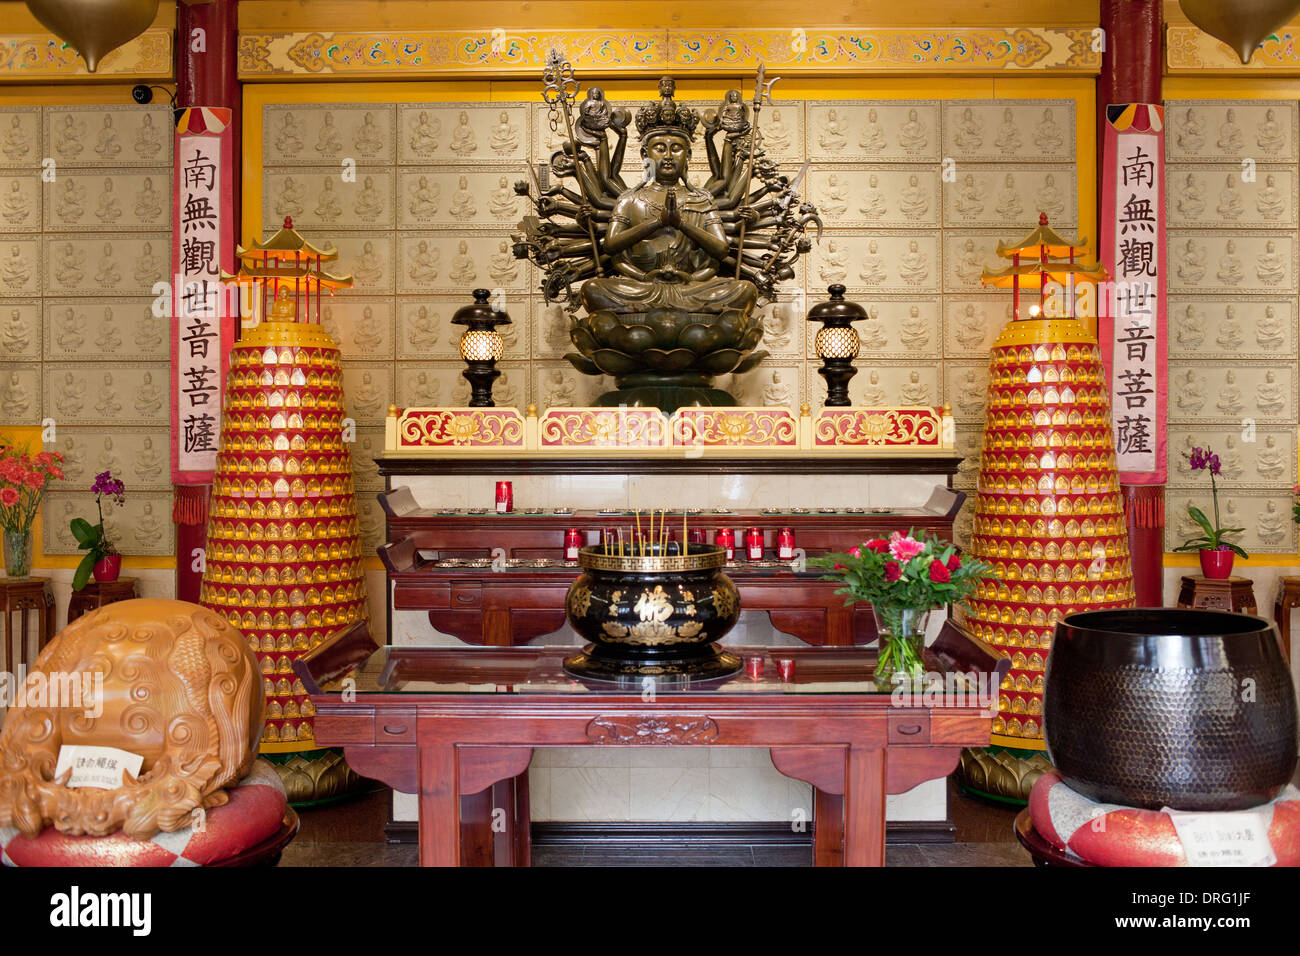 Temple bouddhiste de style chinois avec Fo Guang Shan Bodhisattva Avalokitesvara (chinois : Kuan Yin) statue à Amsterdam, Hollande. Banque D'Images